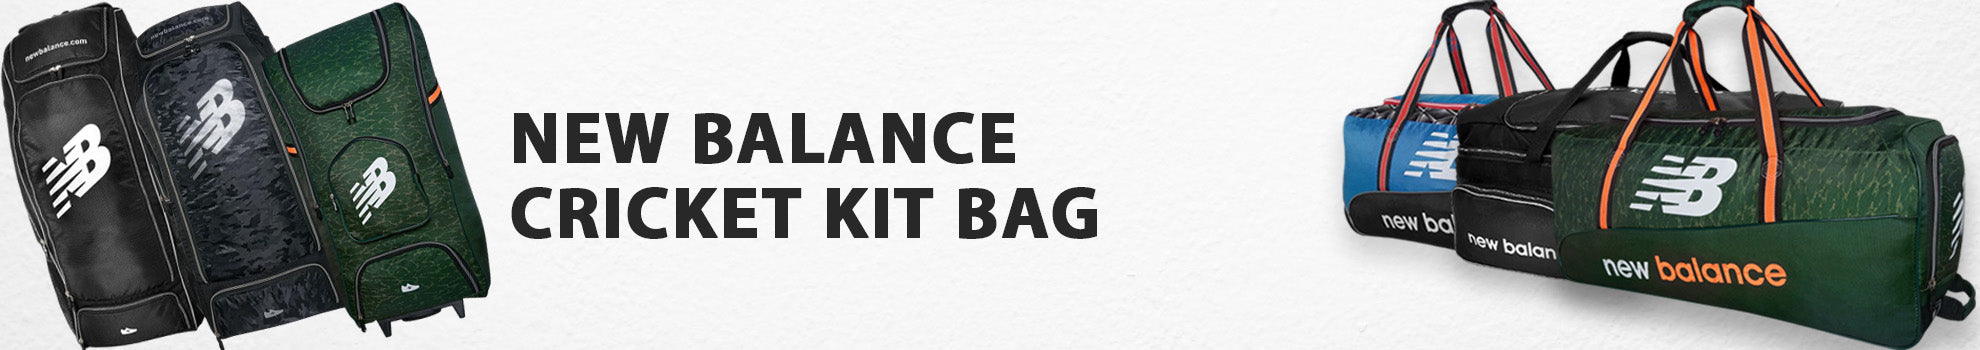 New Balance Cricket Kit Bag